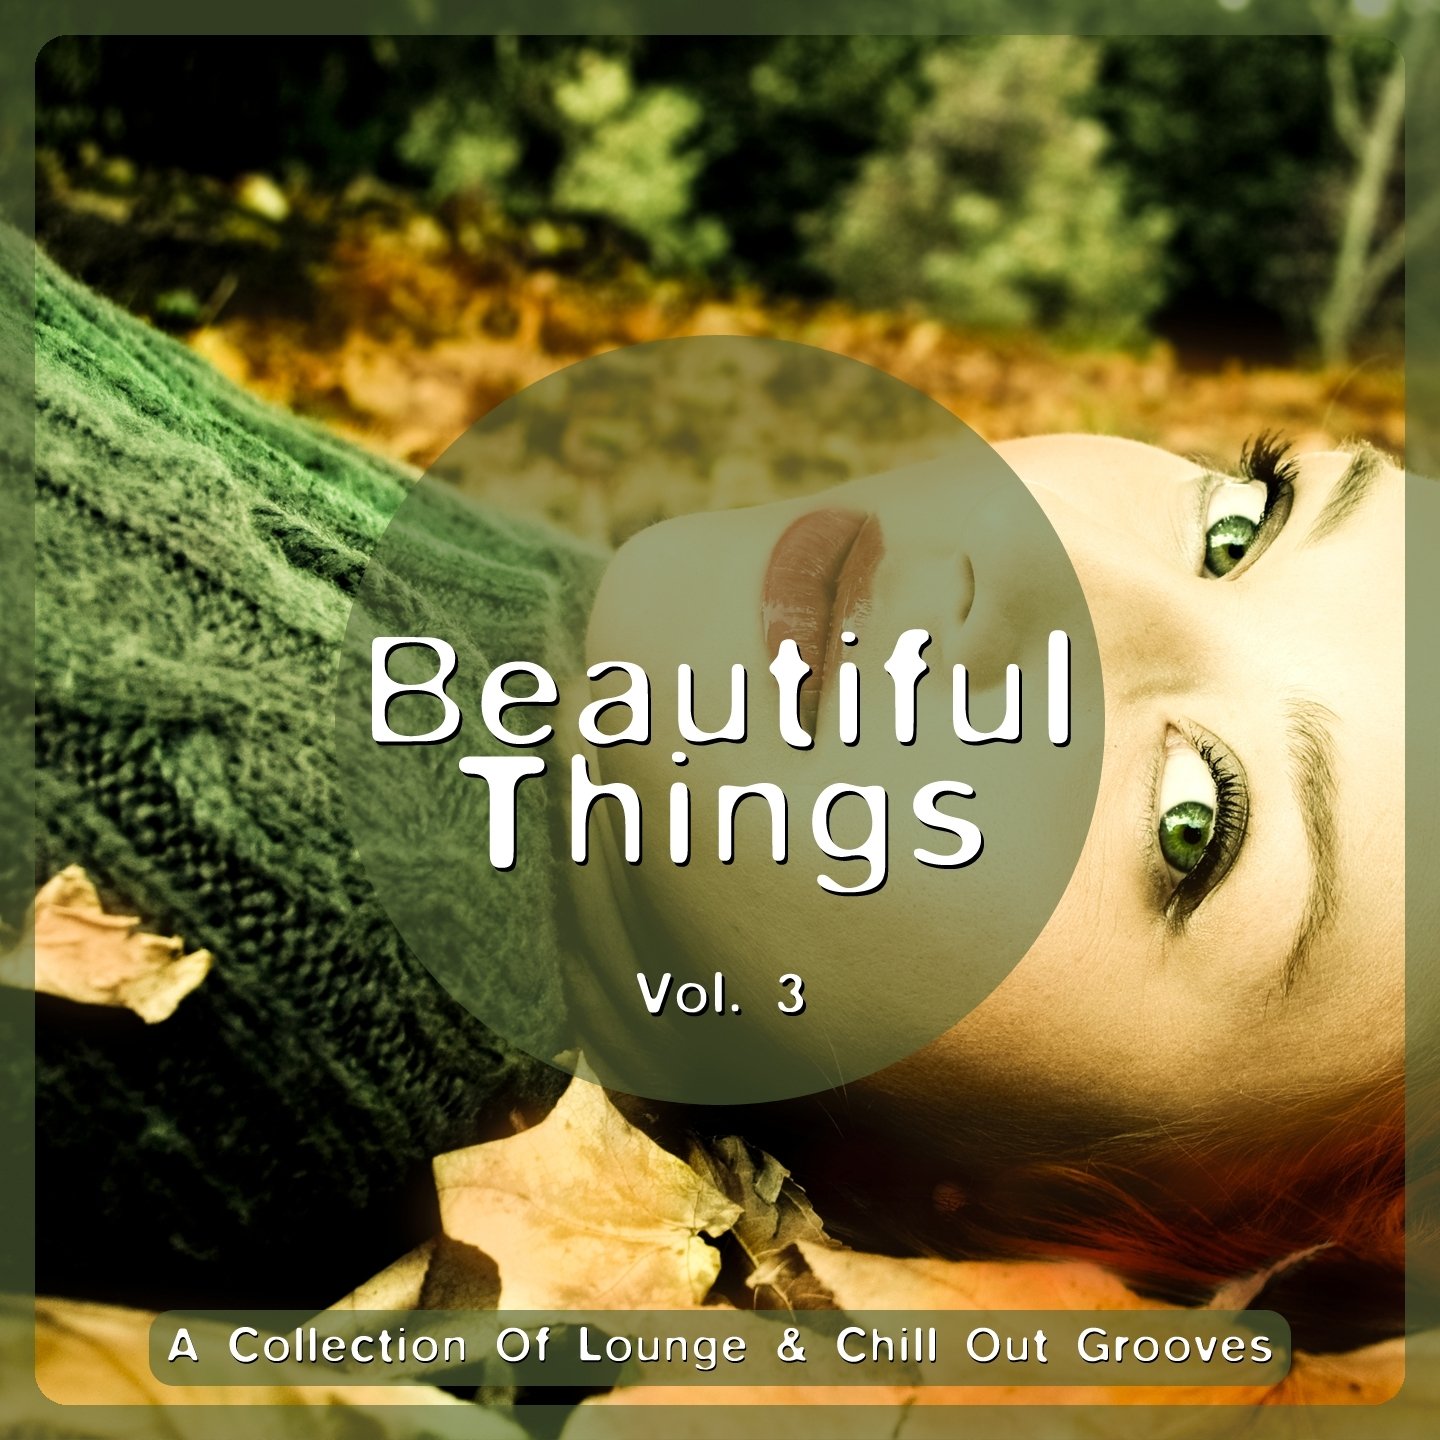 The song is beautiful. Beautiful things слушать. Andain beautiful things. Lounge collection Volume 3. Va - beautiful things Vol. 4.